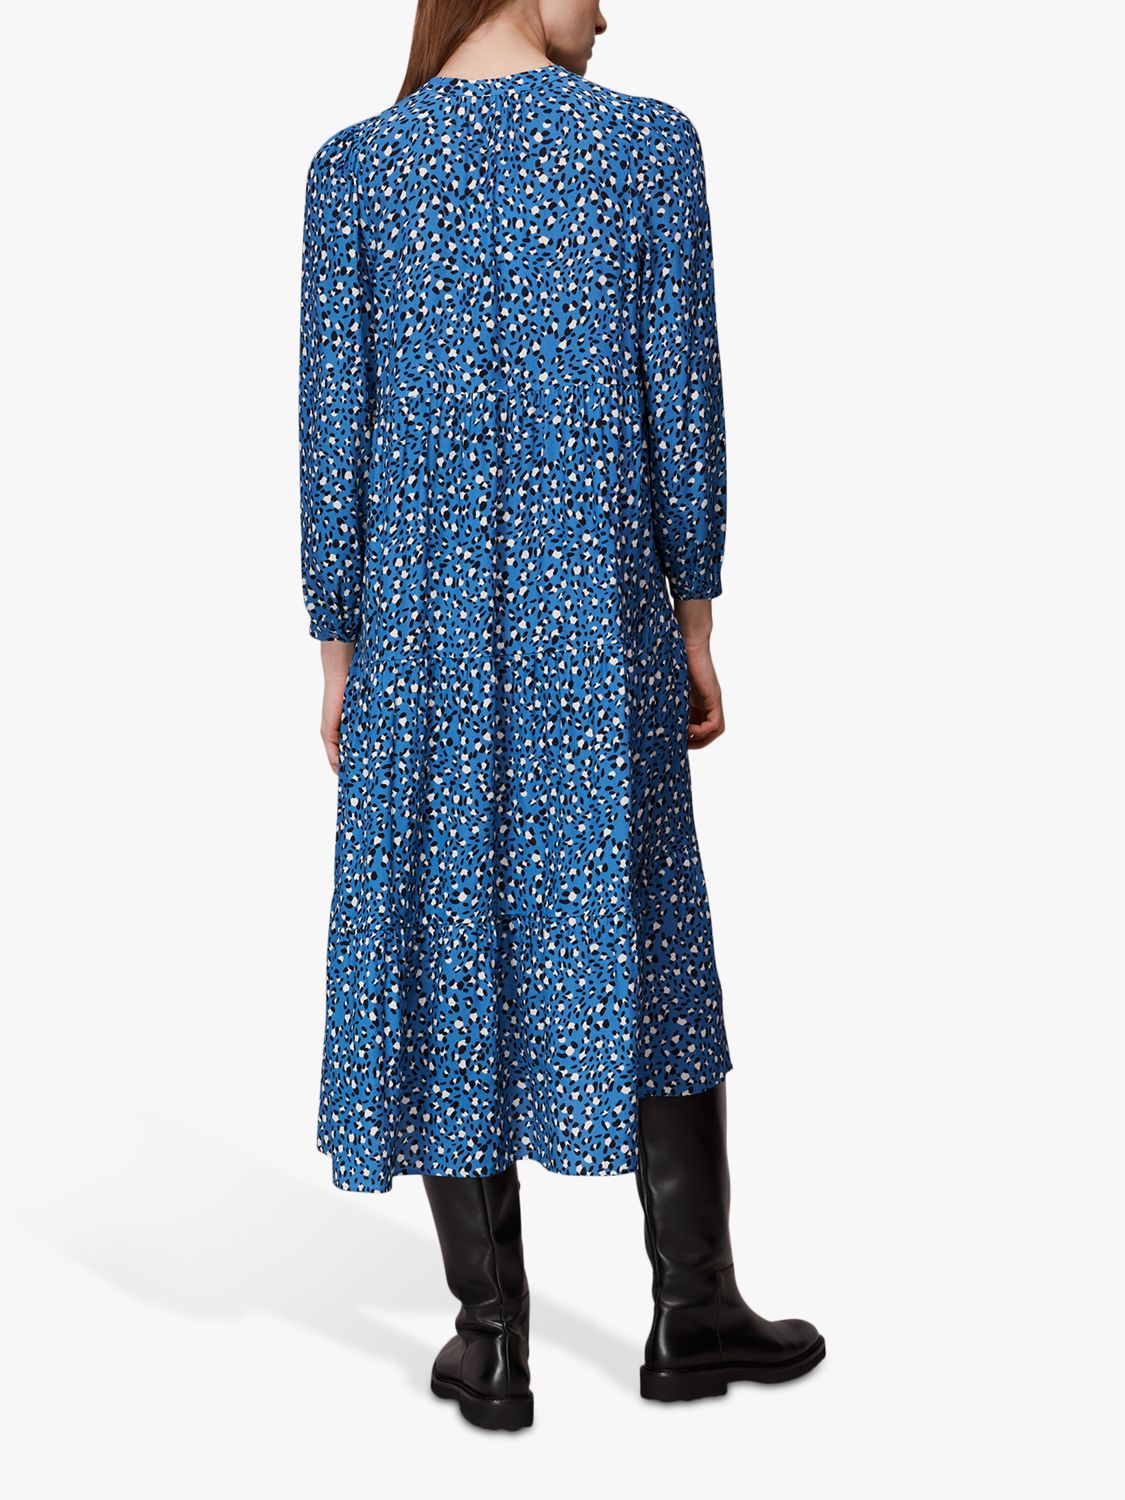 Whistles Amy Wild Leopard Print Dress, Blue at John Lewis & Partners